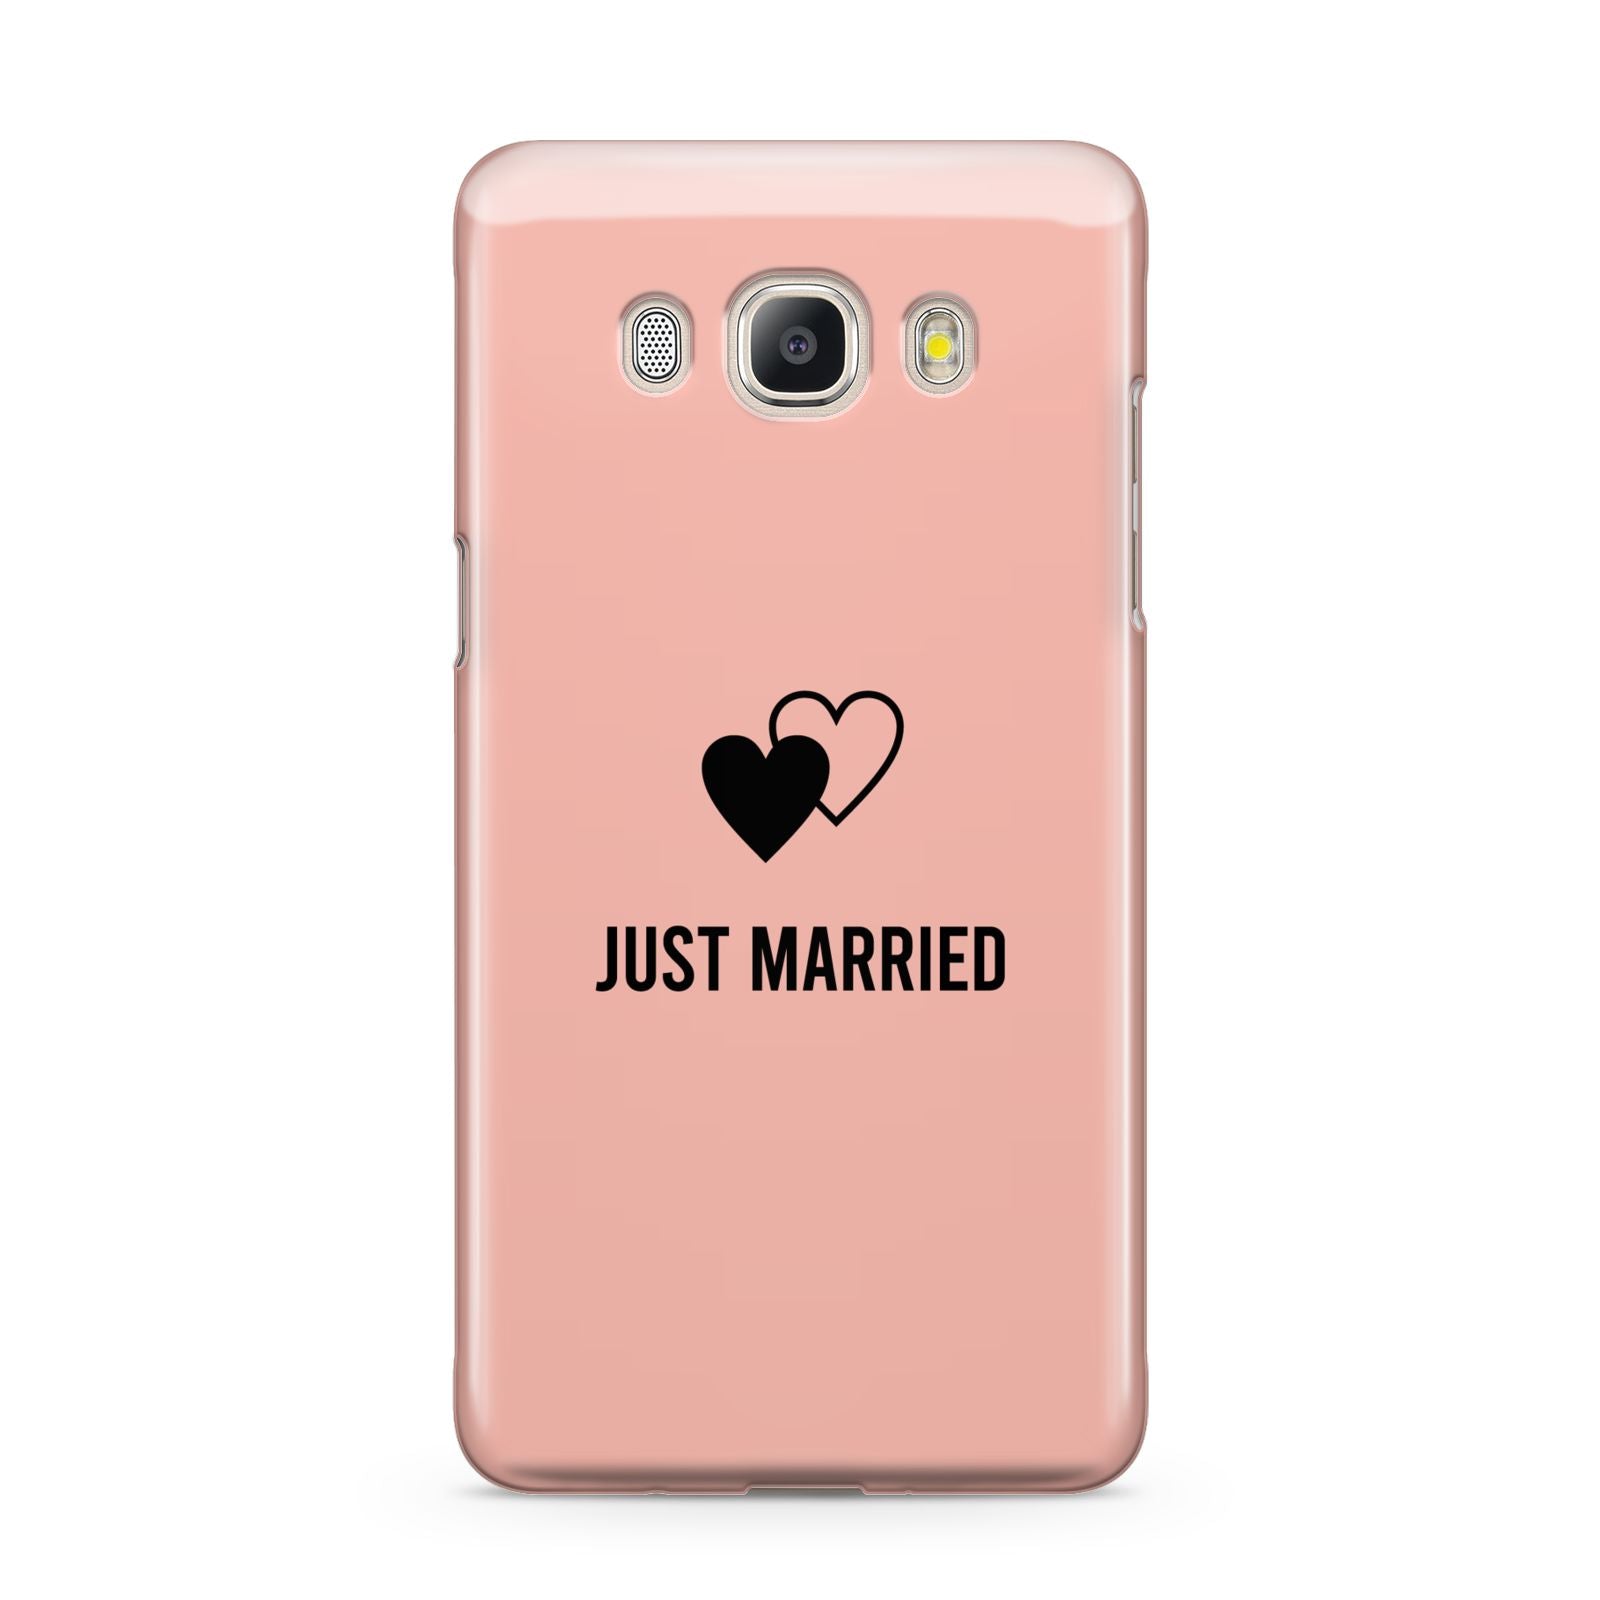 Just Married Samsung Galaxy J5 2016 Case